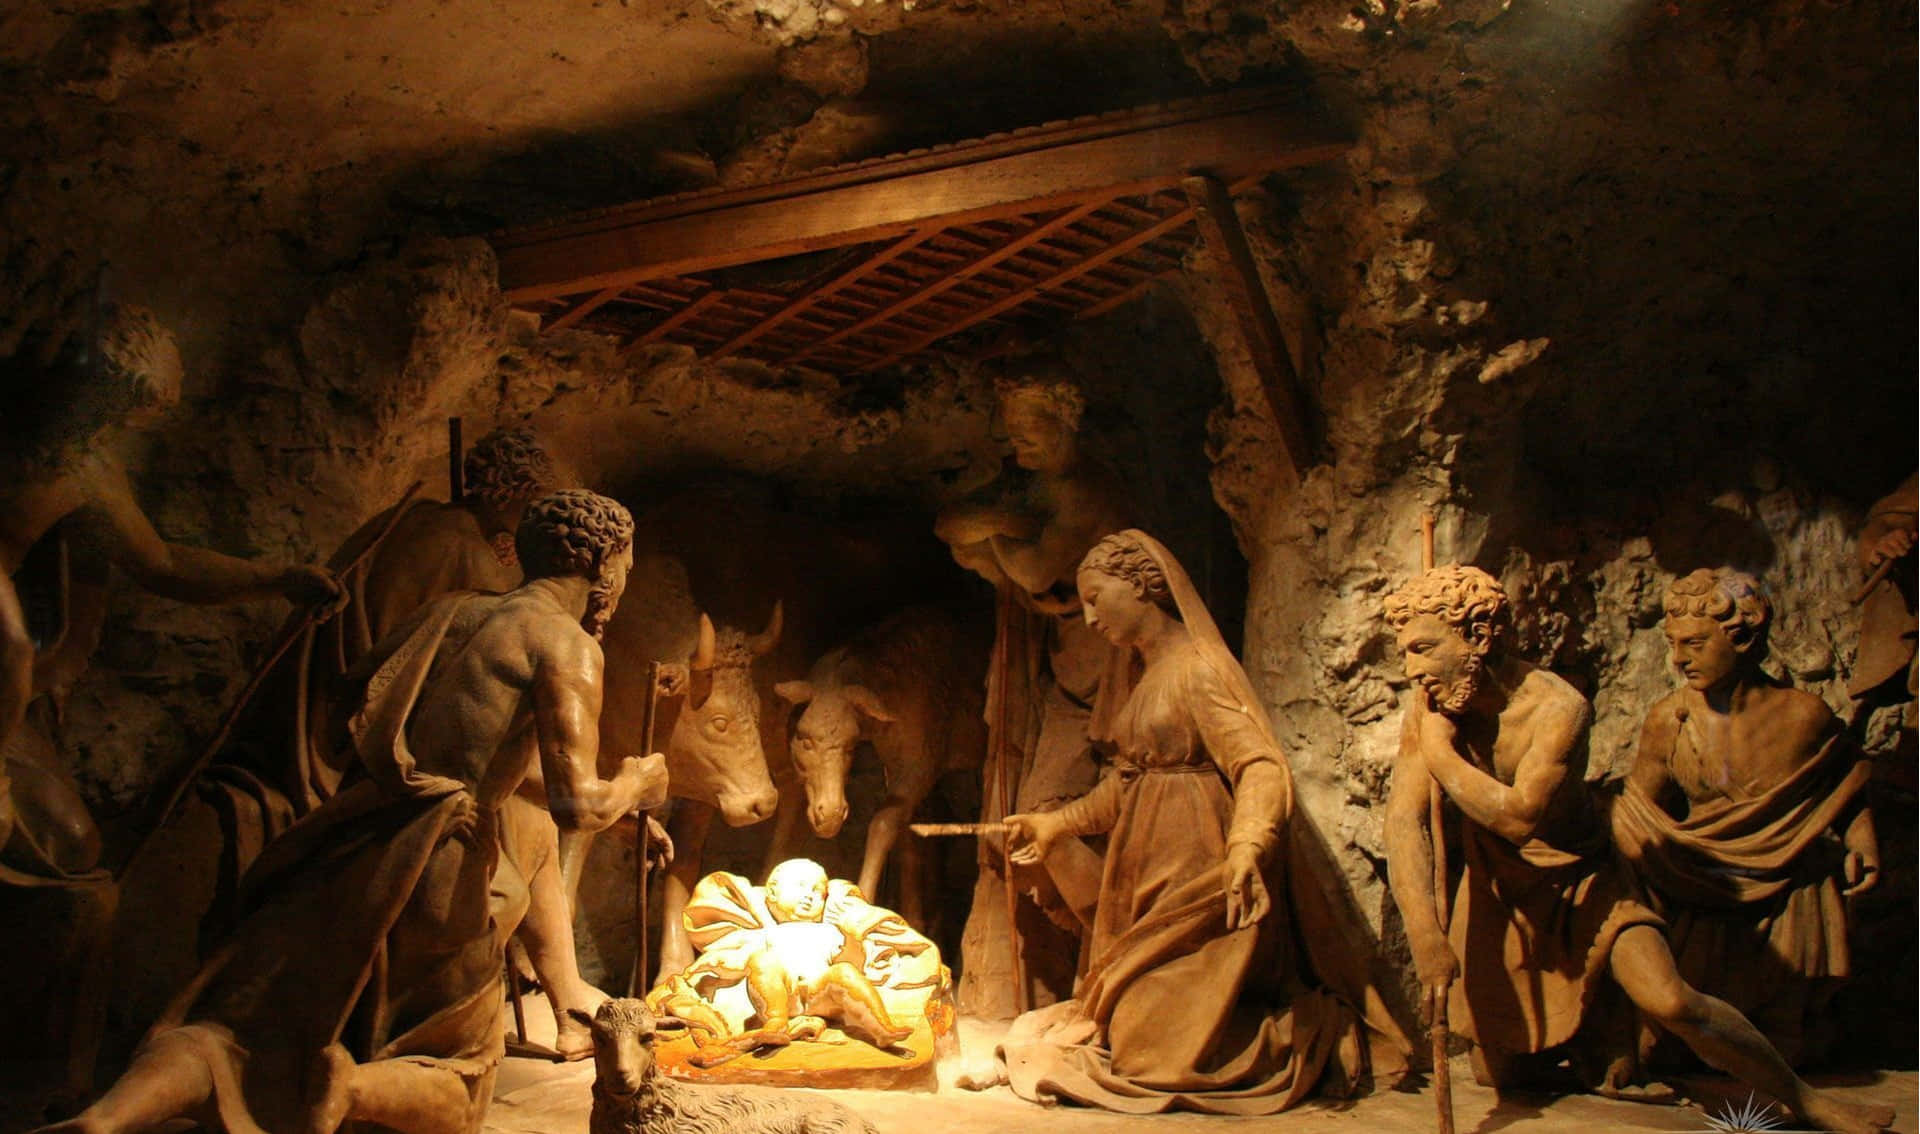 Nativity Scene of the Birth of Jesus